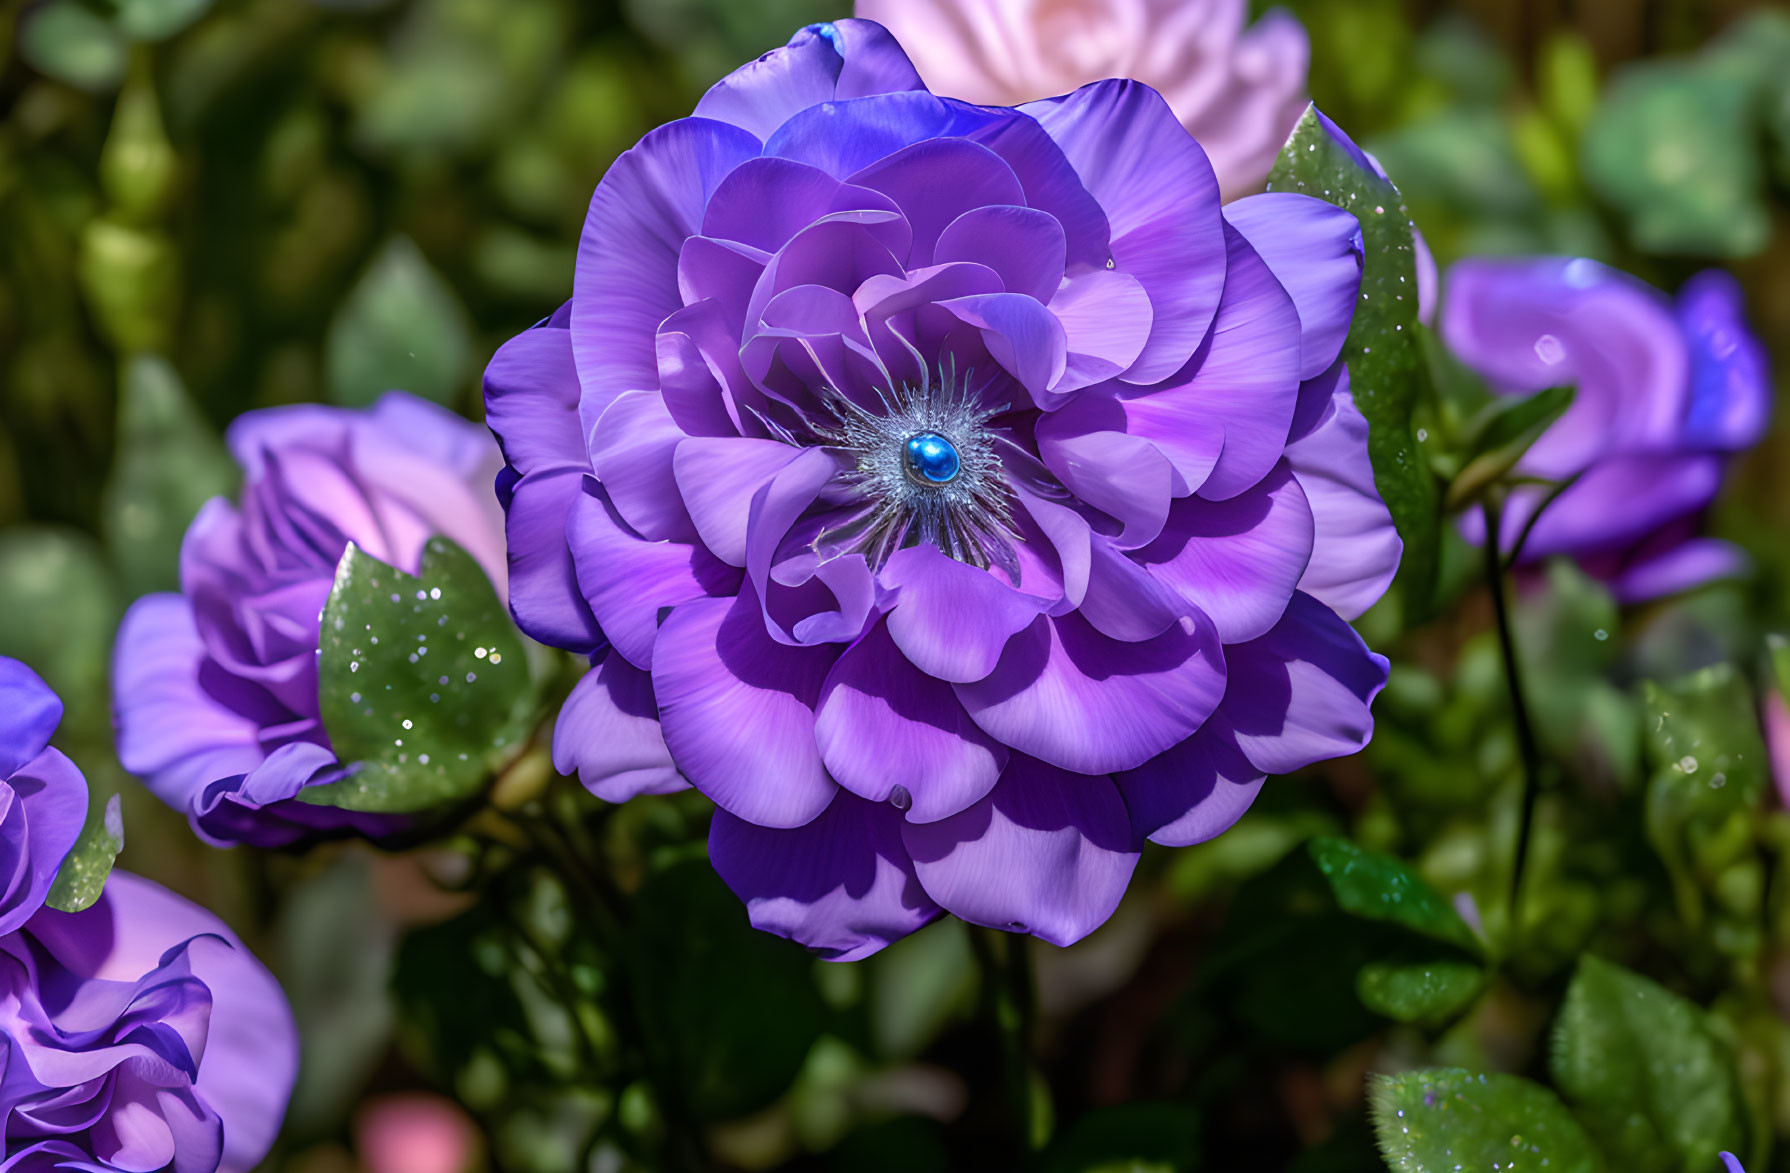 Vibrant Purple Ranunculus Flower with Bright Blue Center Blooming under Sunlight